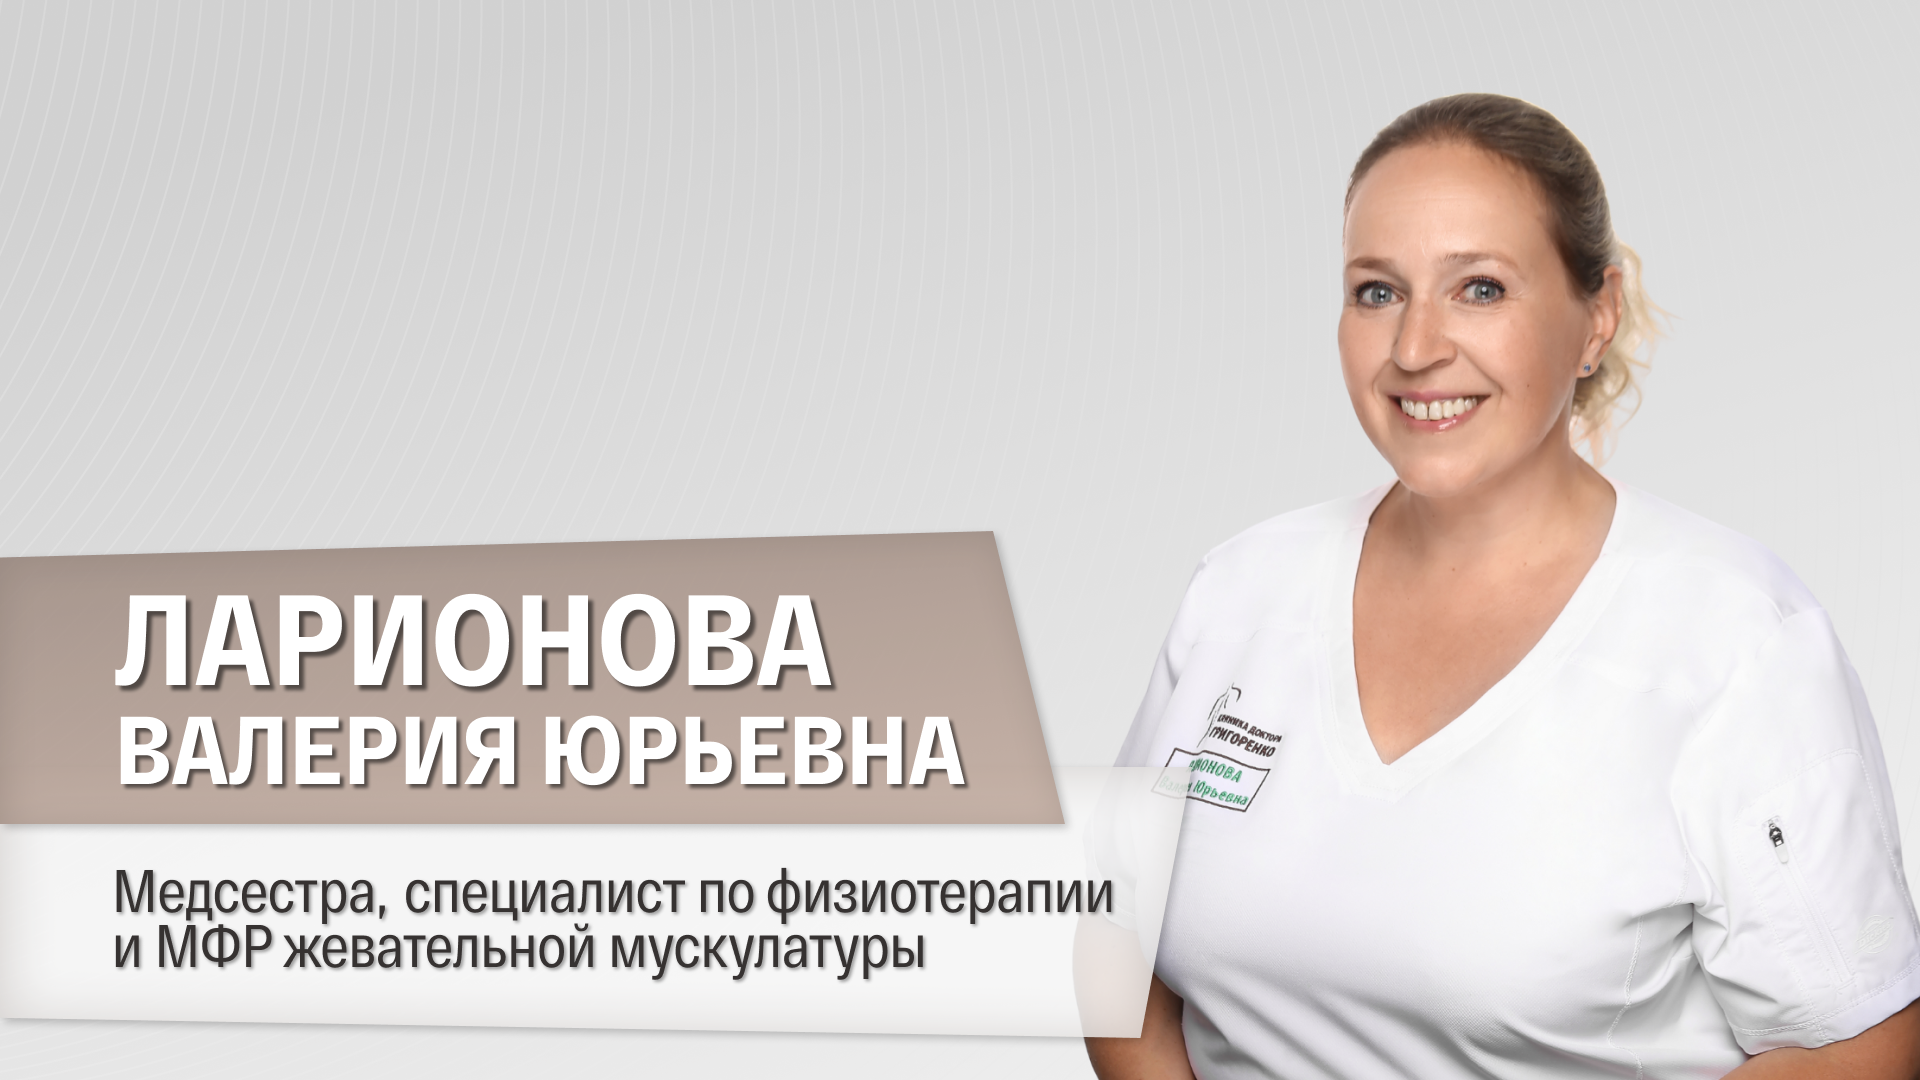 Ларионова Валерия Юрьевна — Клиника доктора Григоренко